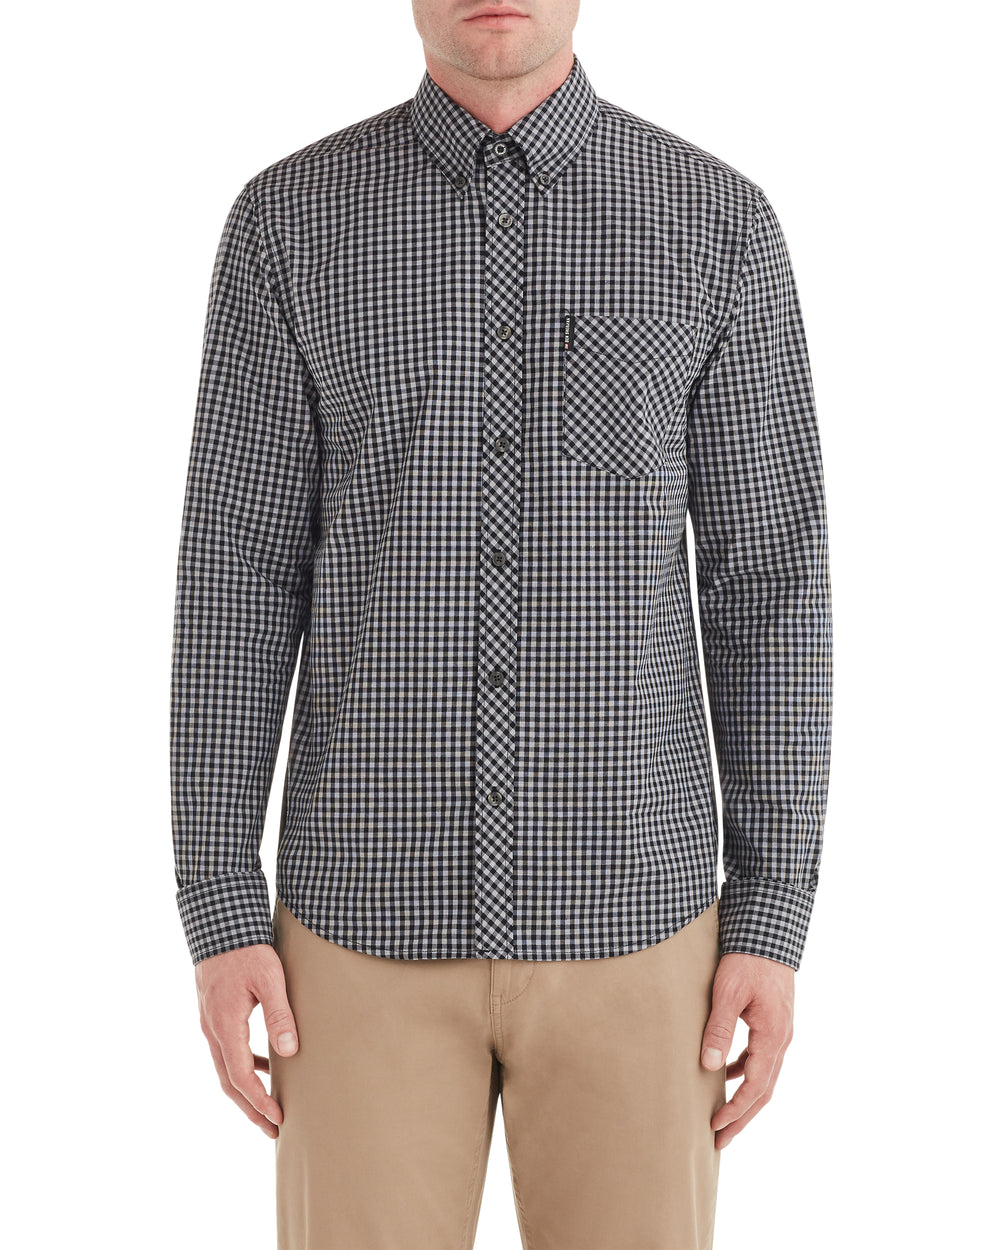 Long-Sleeve Gingham Shirt - Graphite Grey